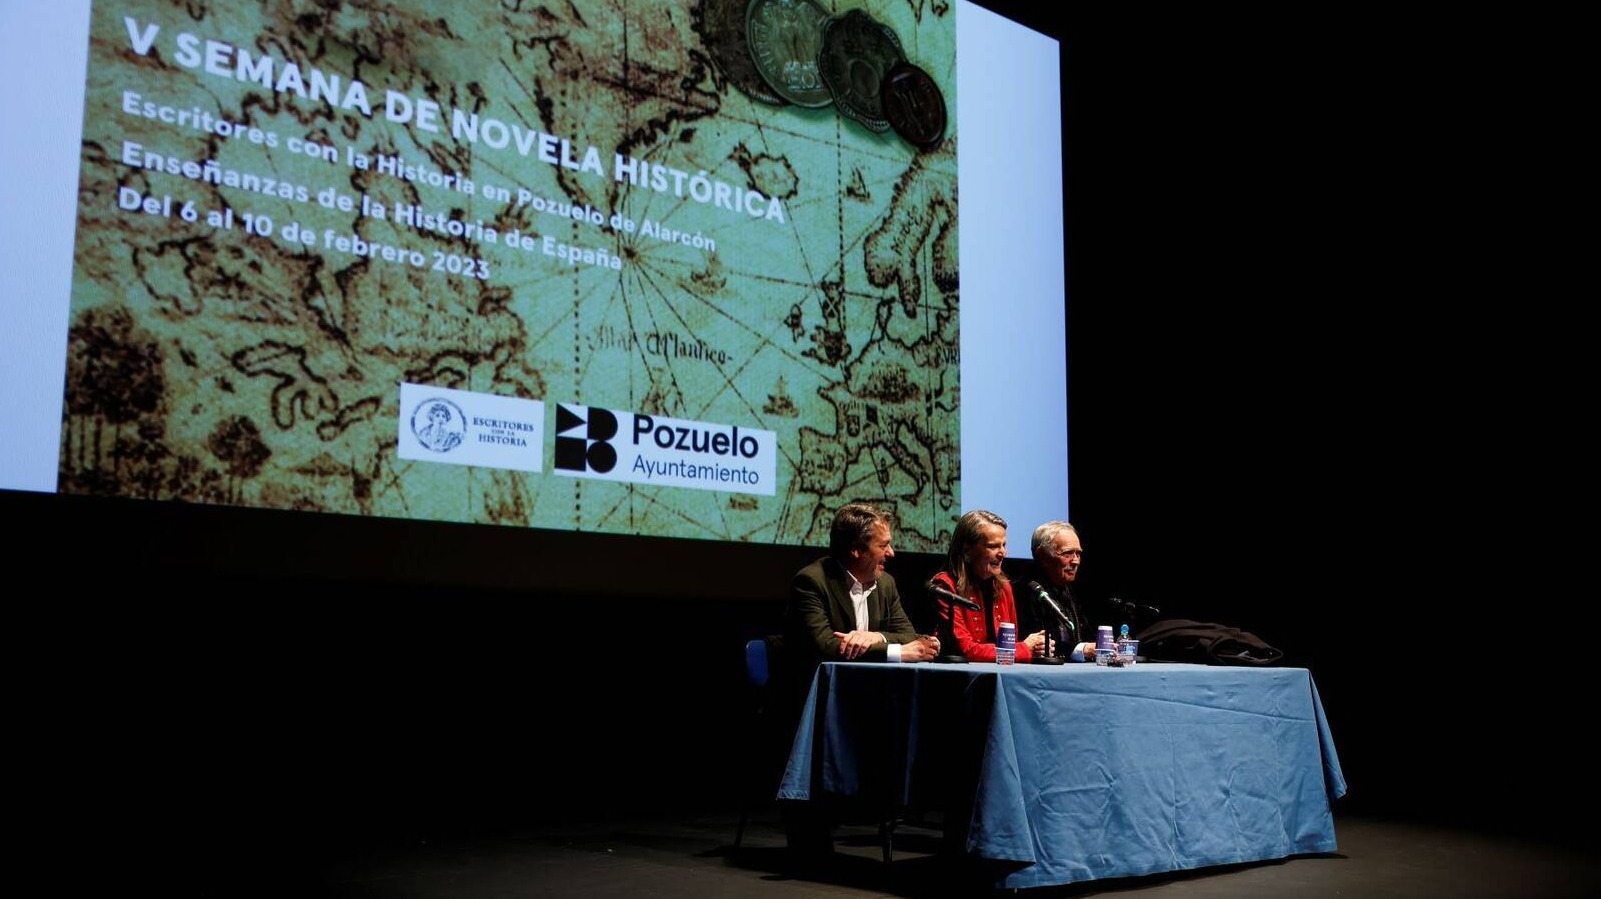 José Manuel Sala Martí gana el IV Premio Novela Histórica de Pozuelo